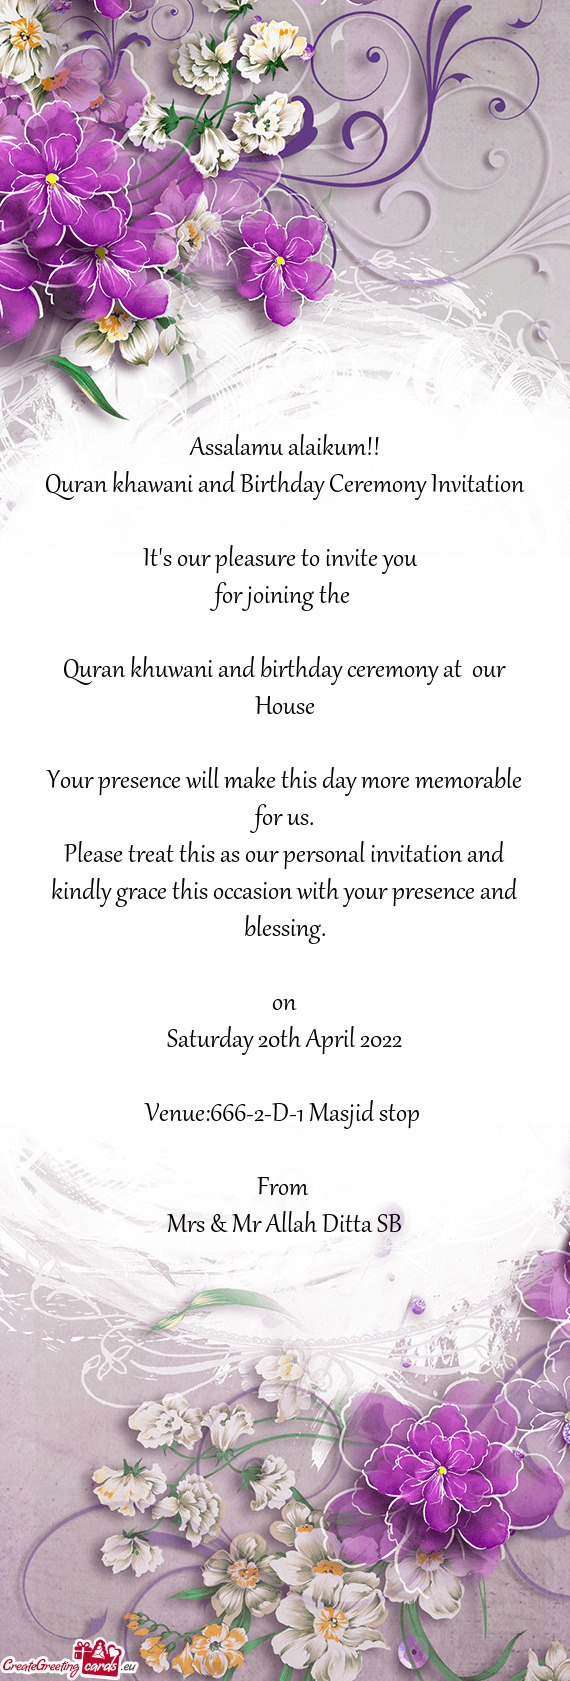 Quran khawani and Birthday Ceremony Invitation